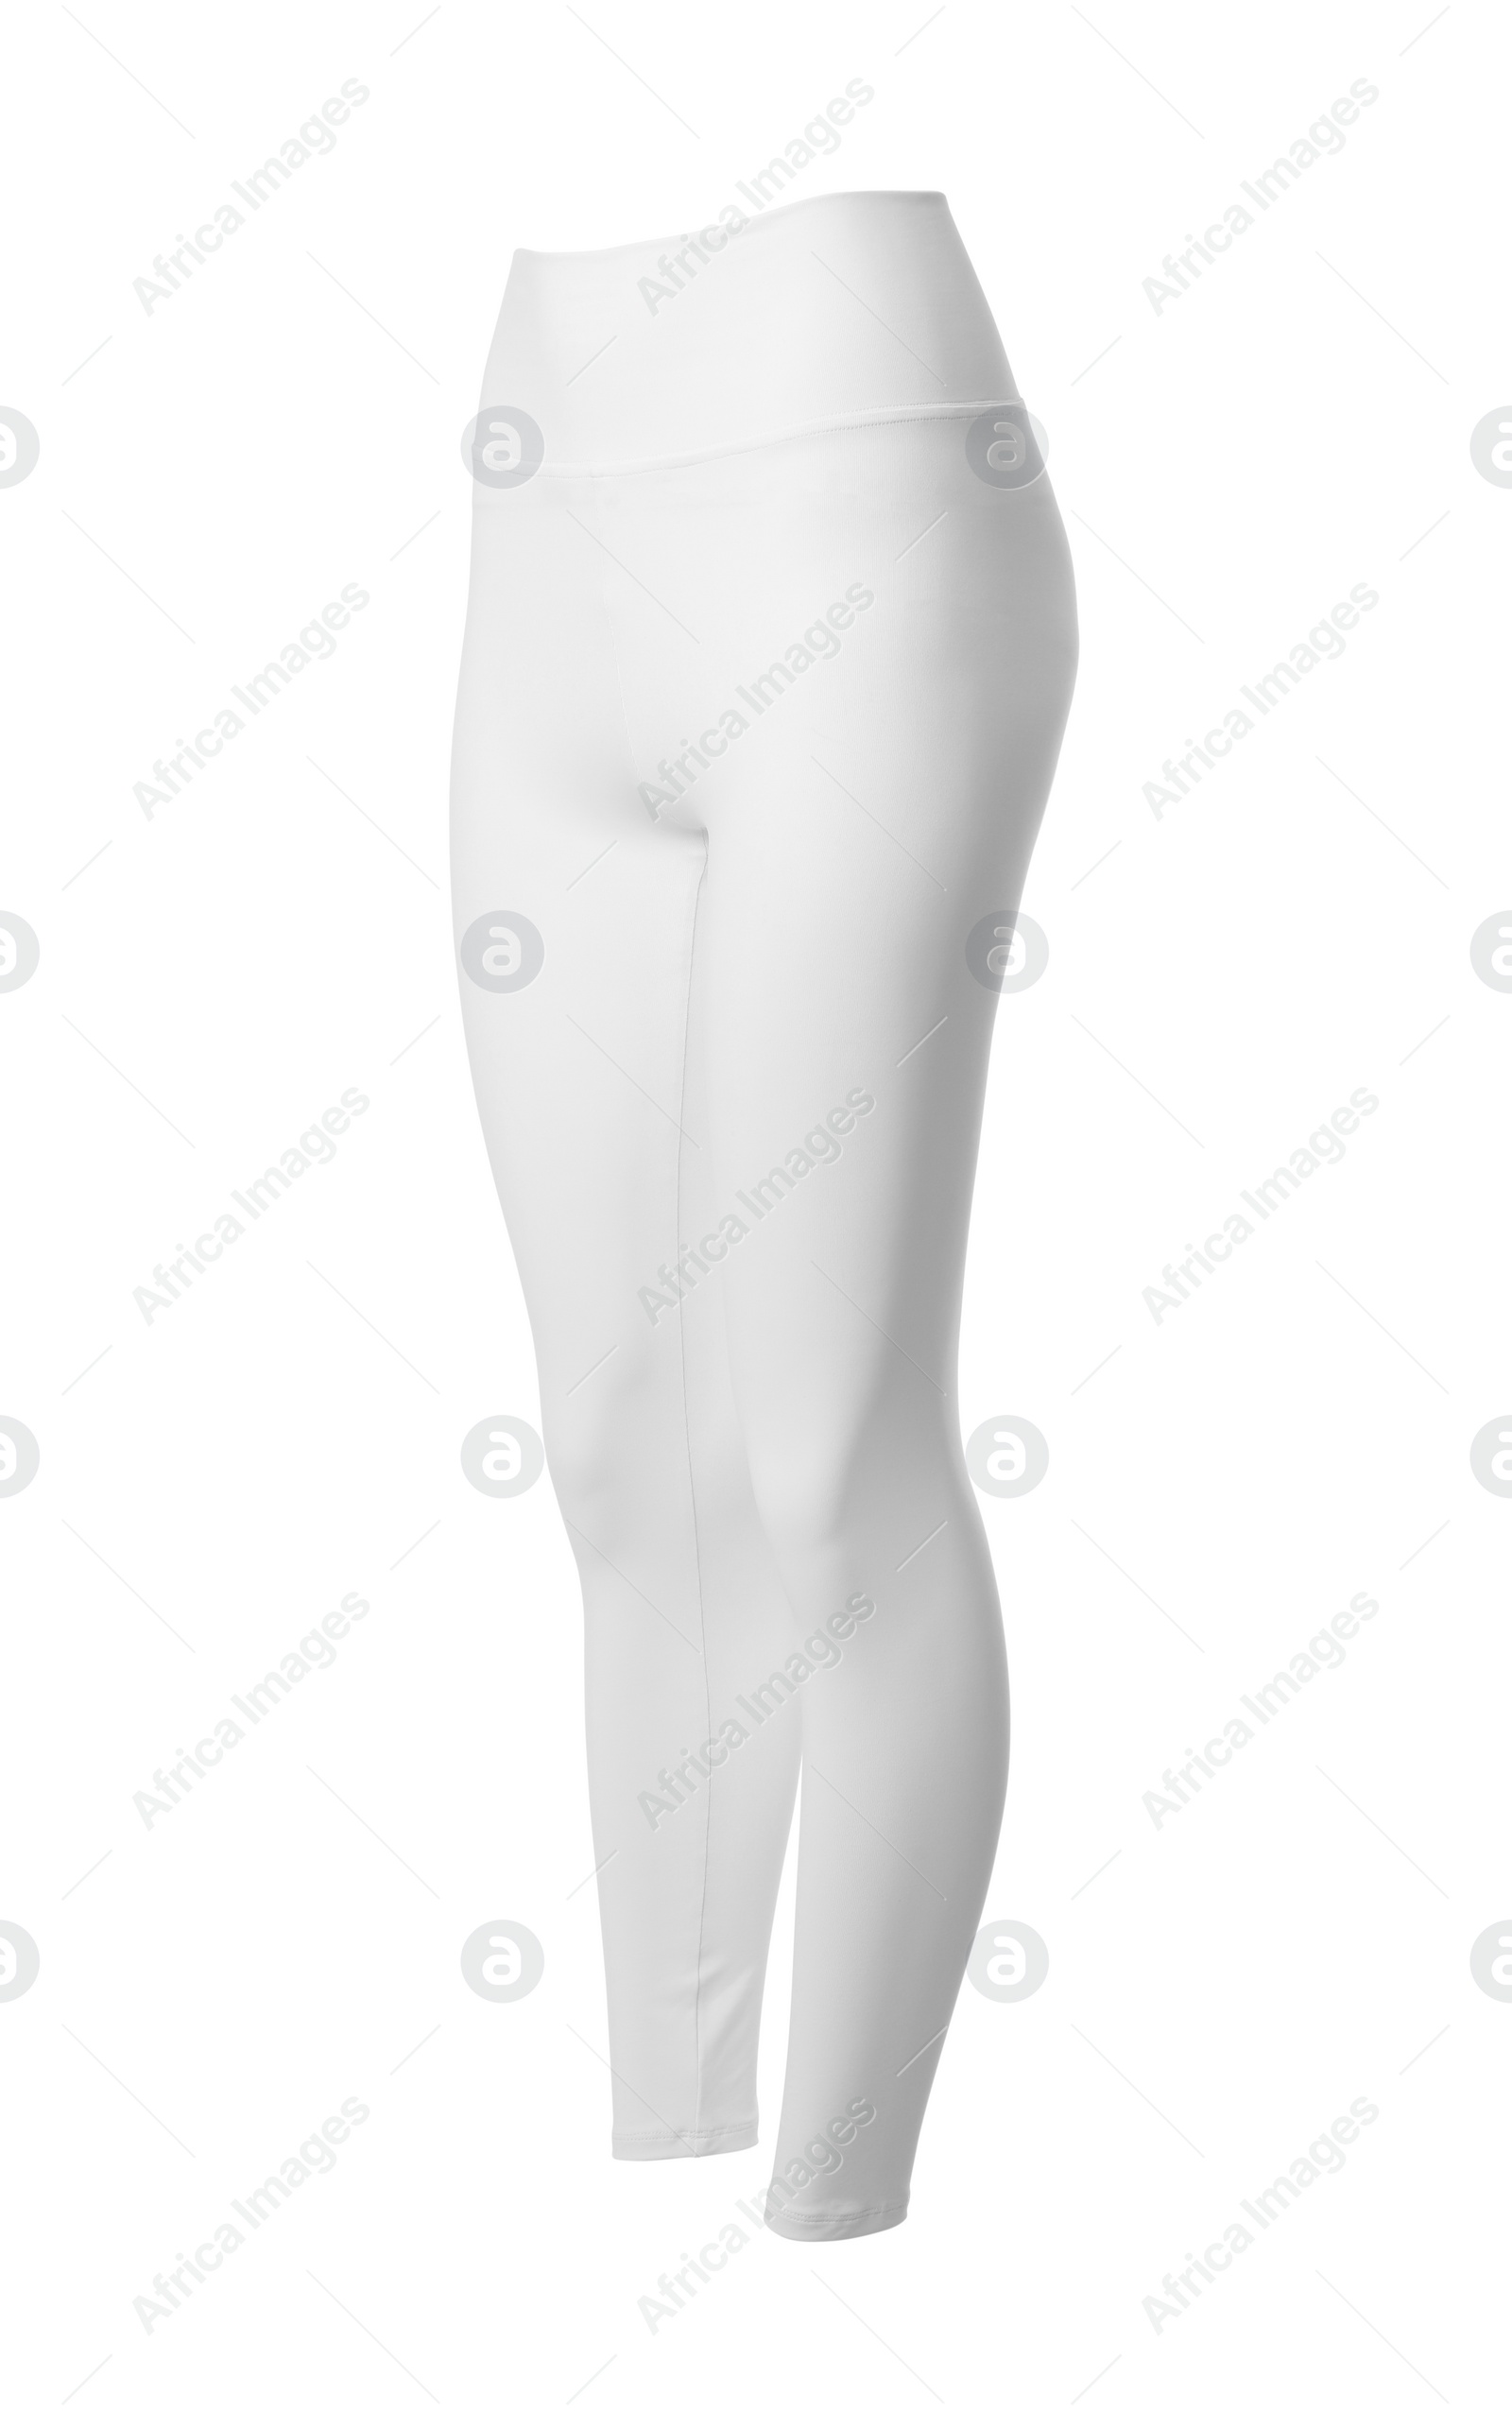 Photo of Women's leggins isolated on white. Sports clothing